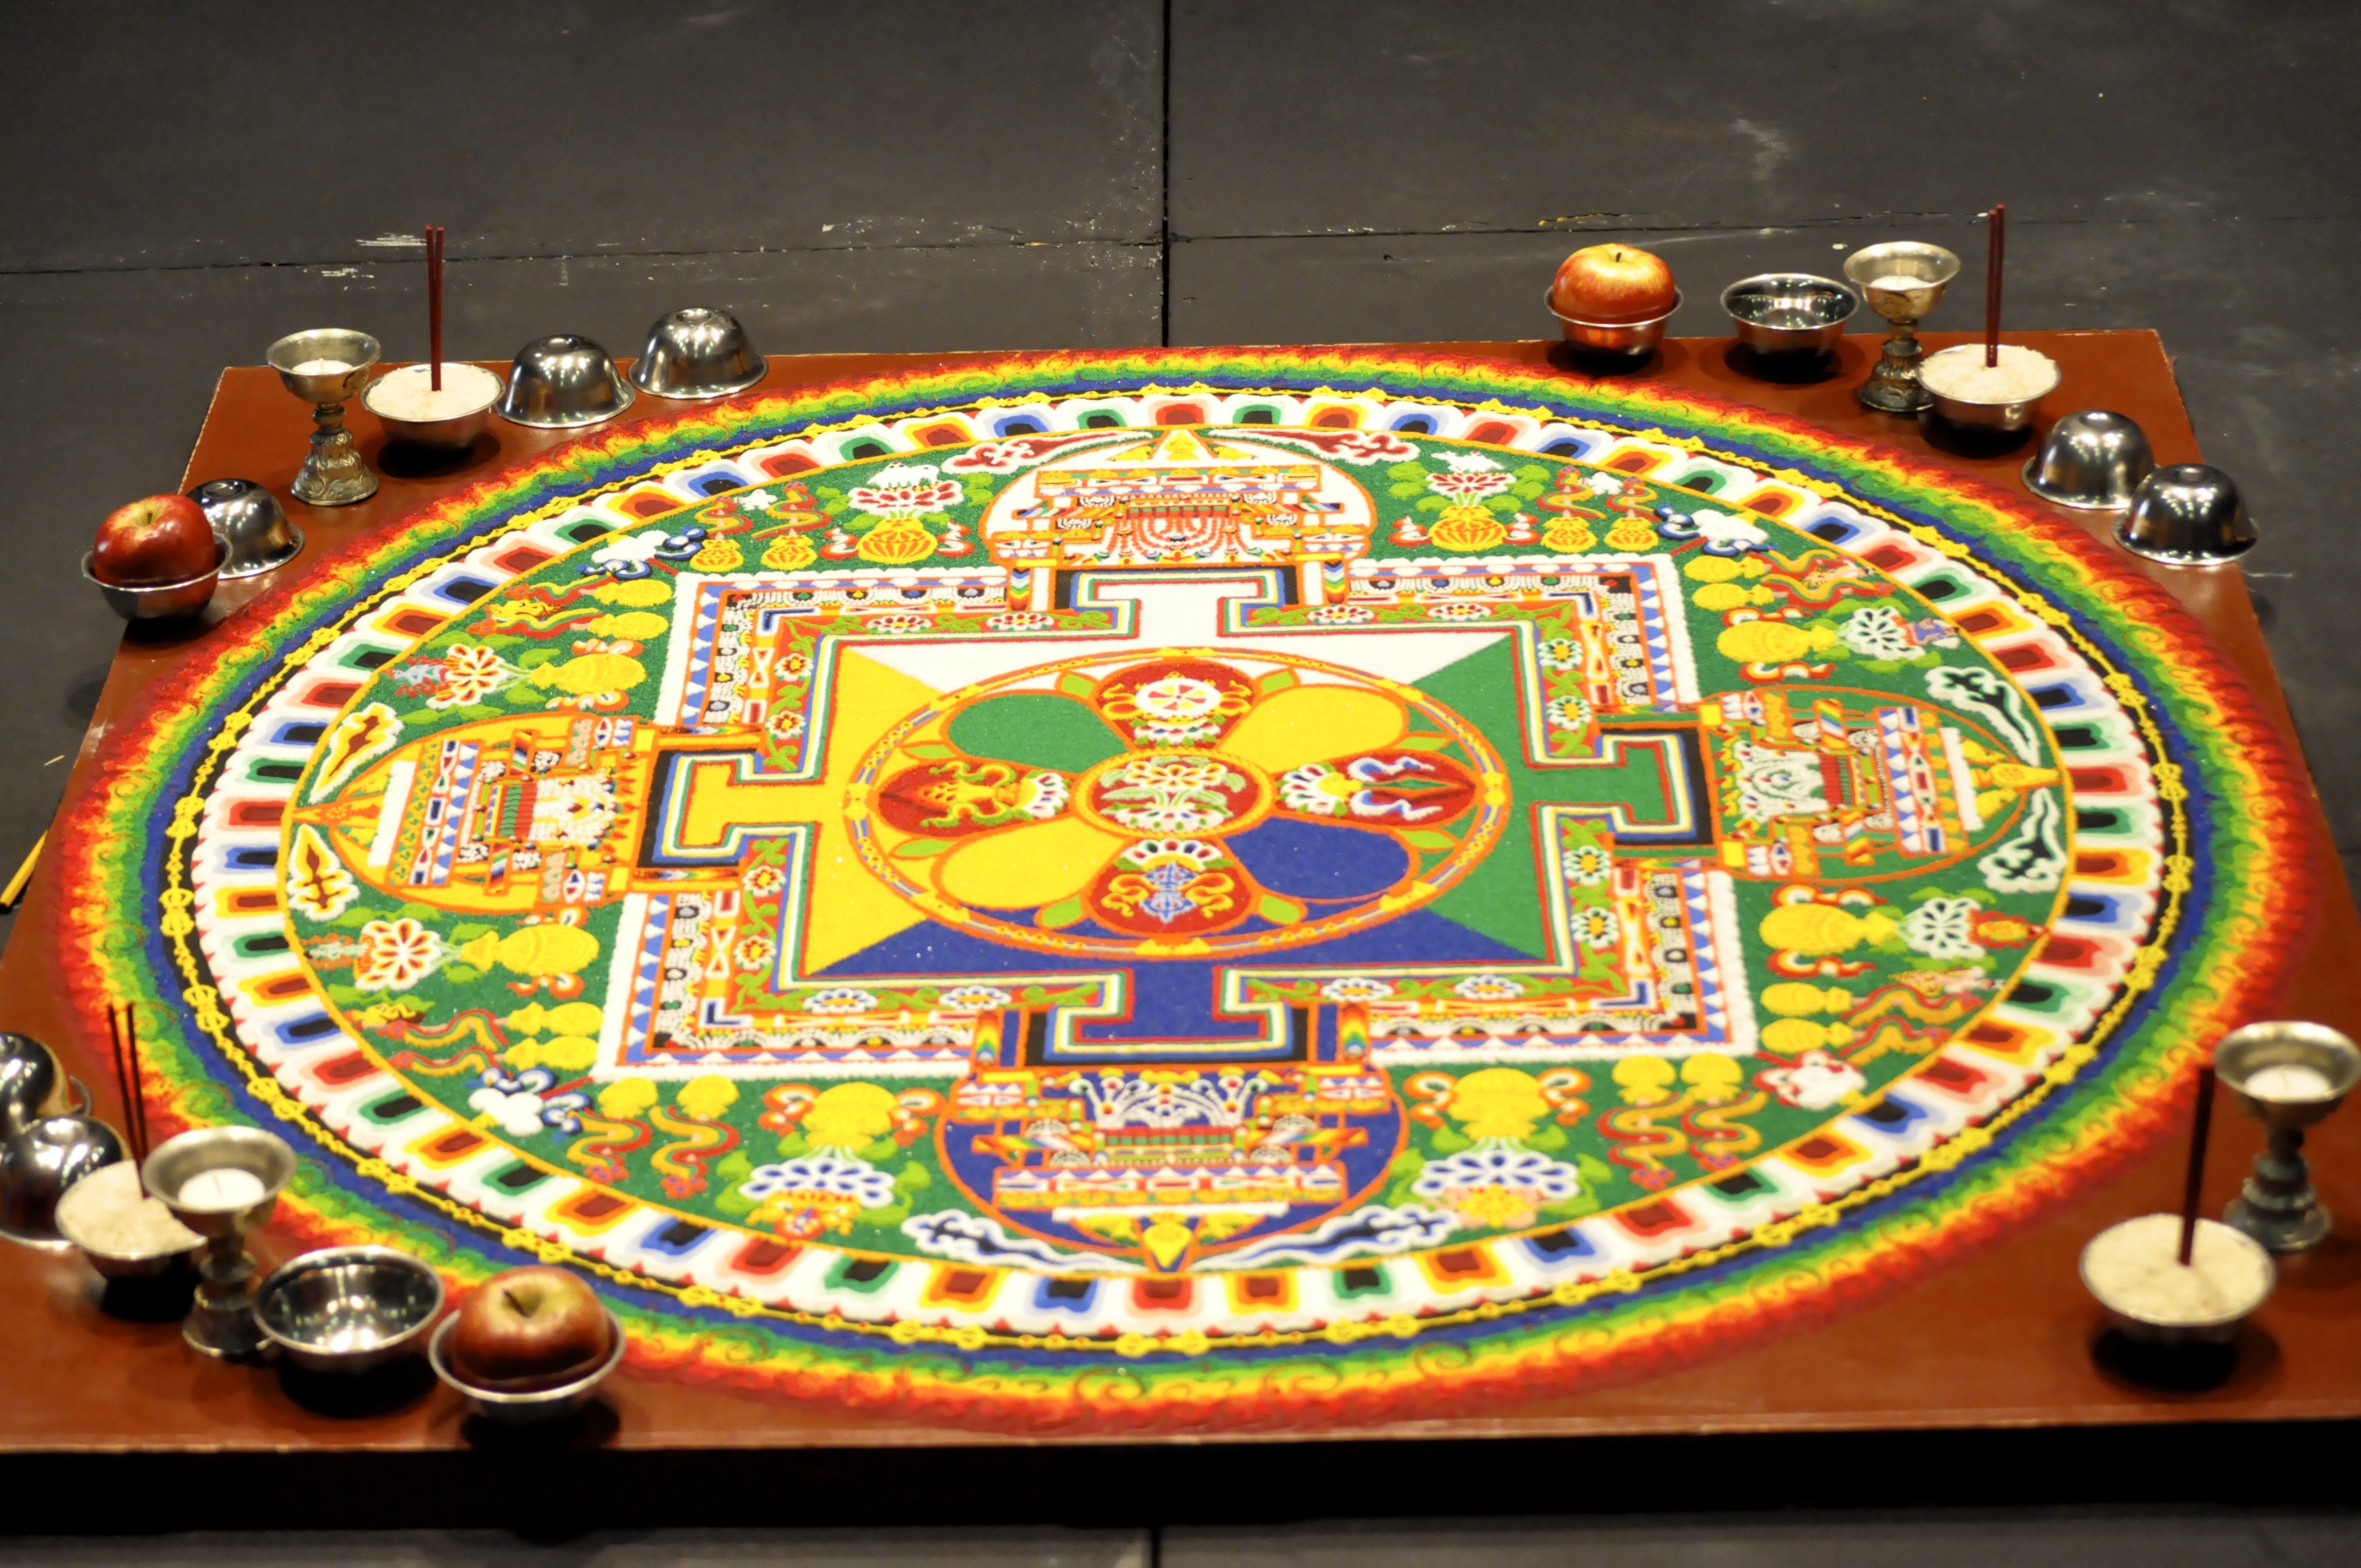 Learn about Mandala Art, Design, Creation & History